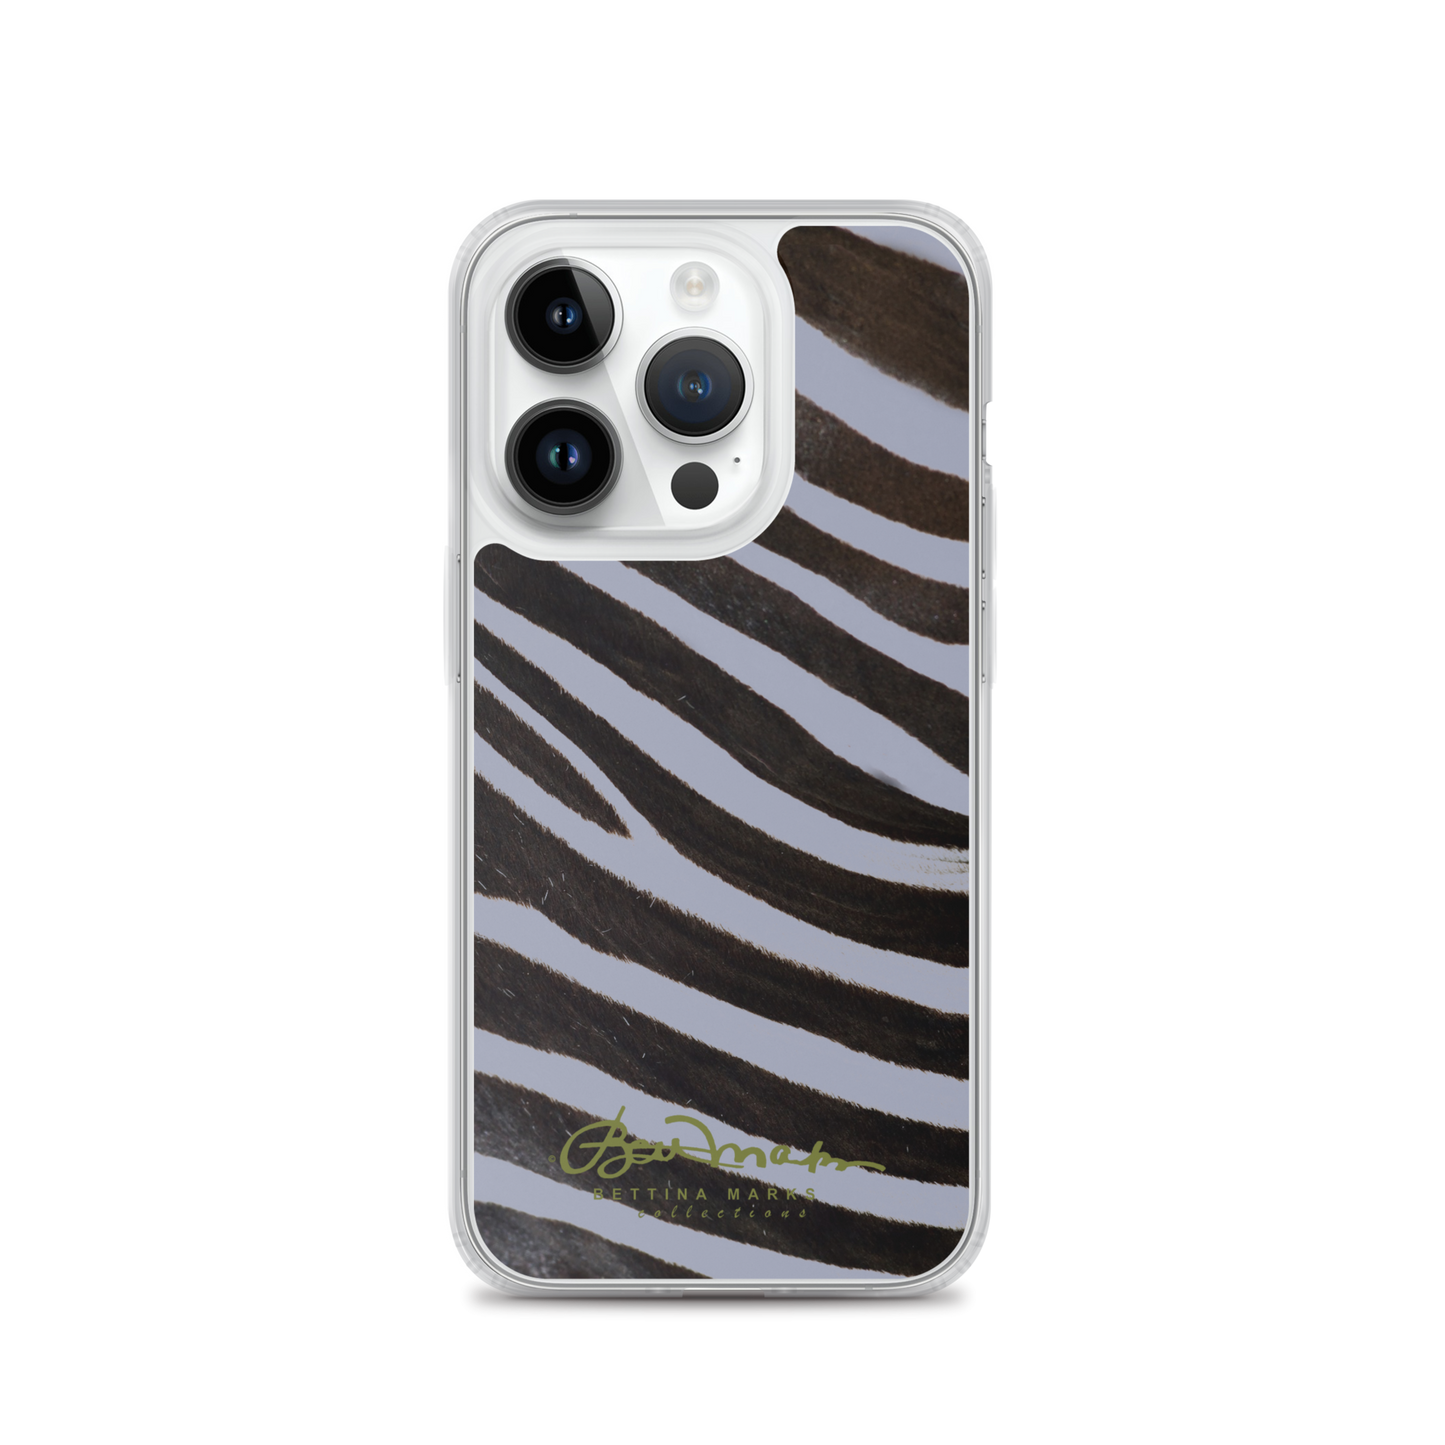 Grey Zebra iPhone Case (select model)